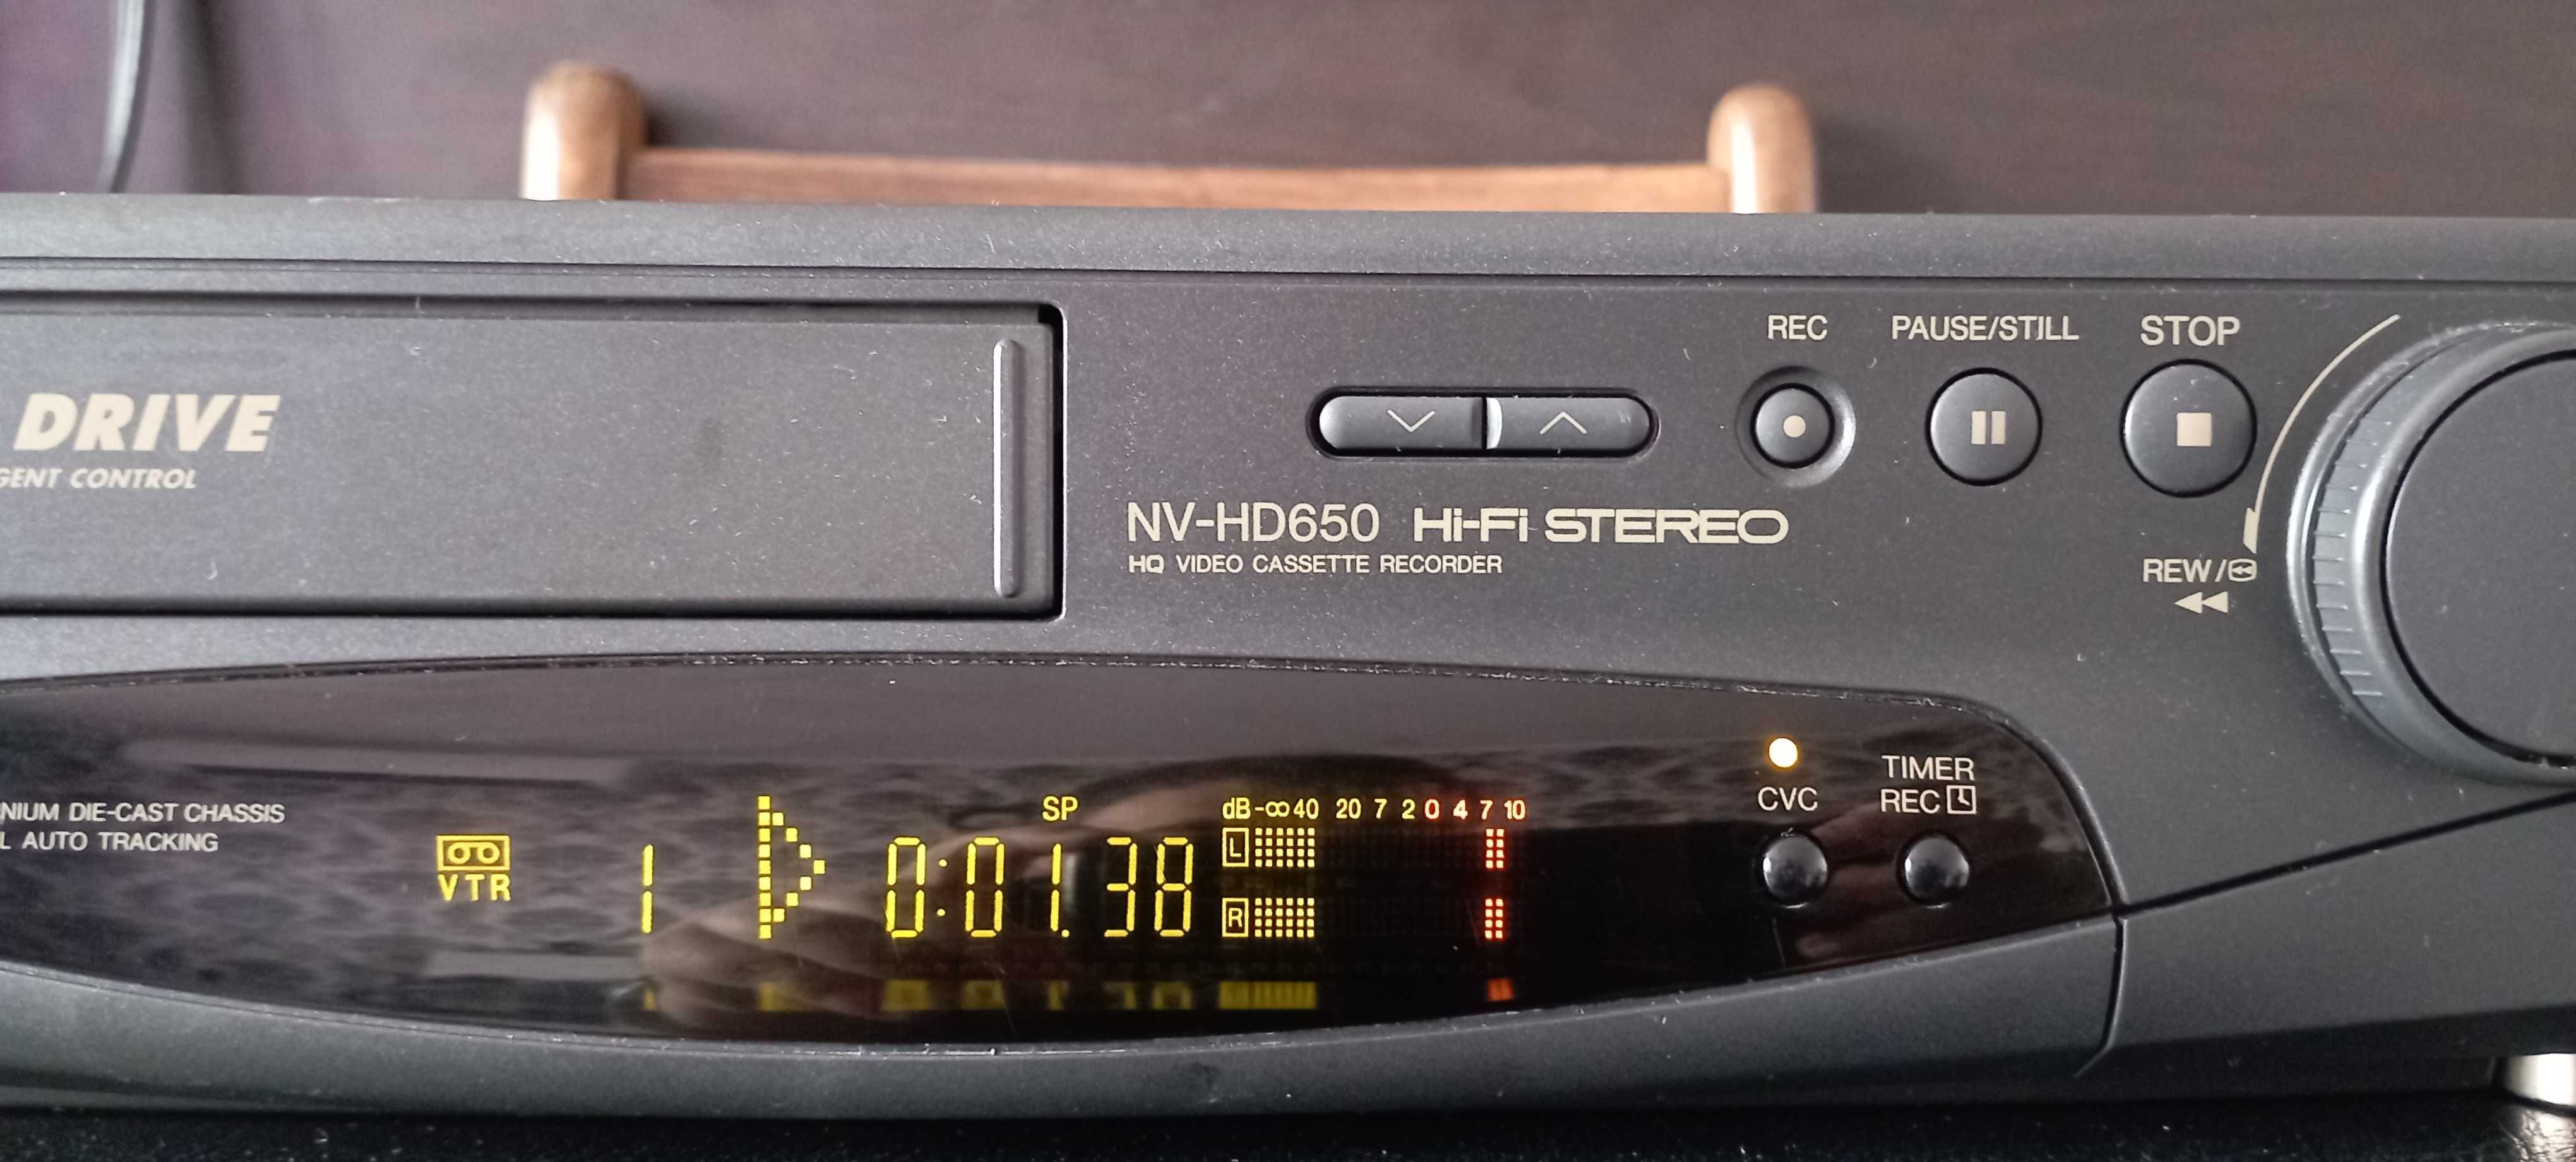 Panasonic NV-HD650 Hi-Fi Stereo